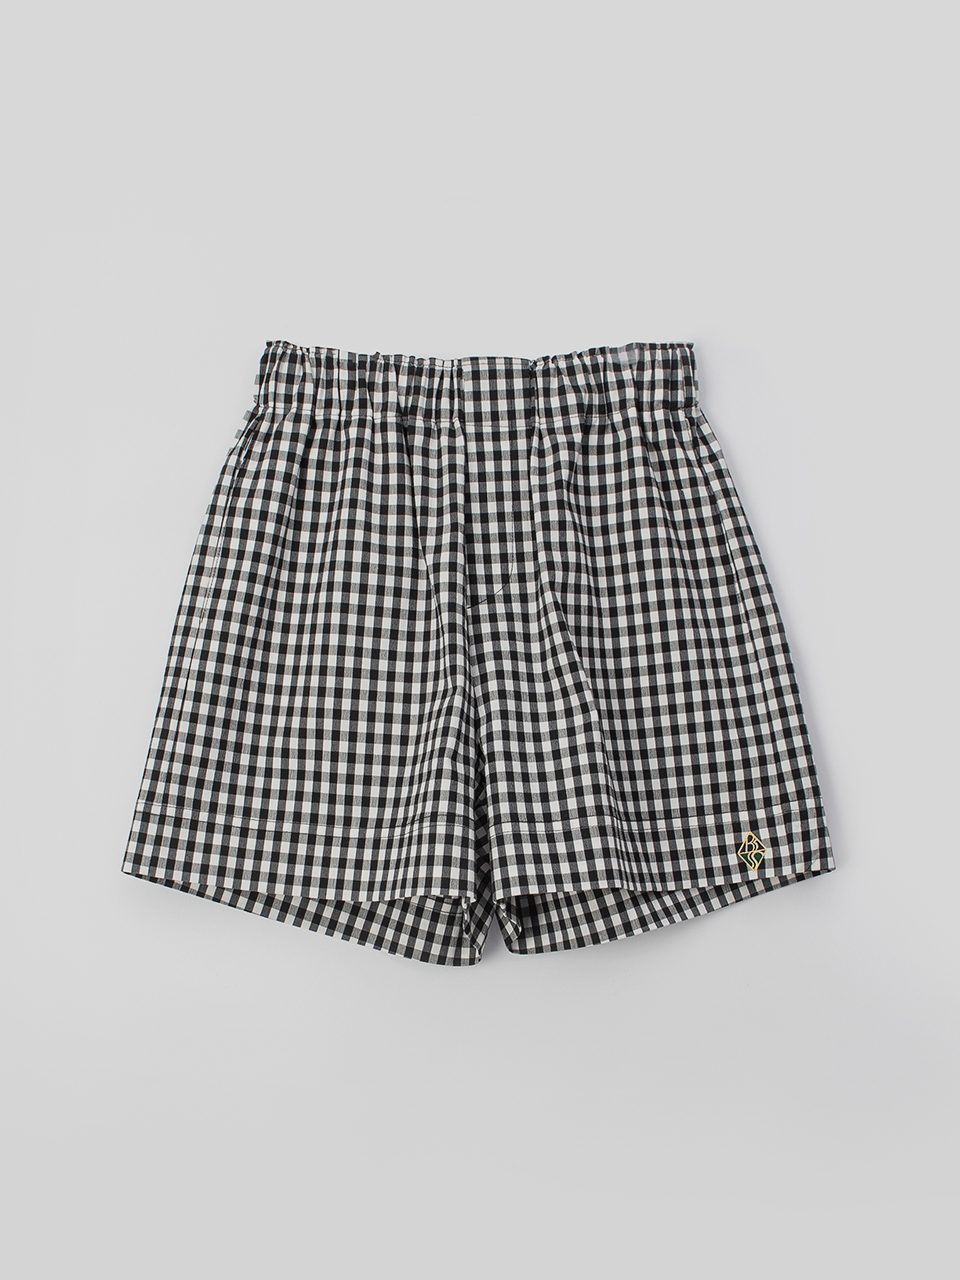 rhombus banding shorts - checkBRENDA BRENDEN